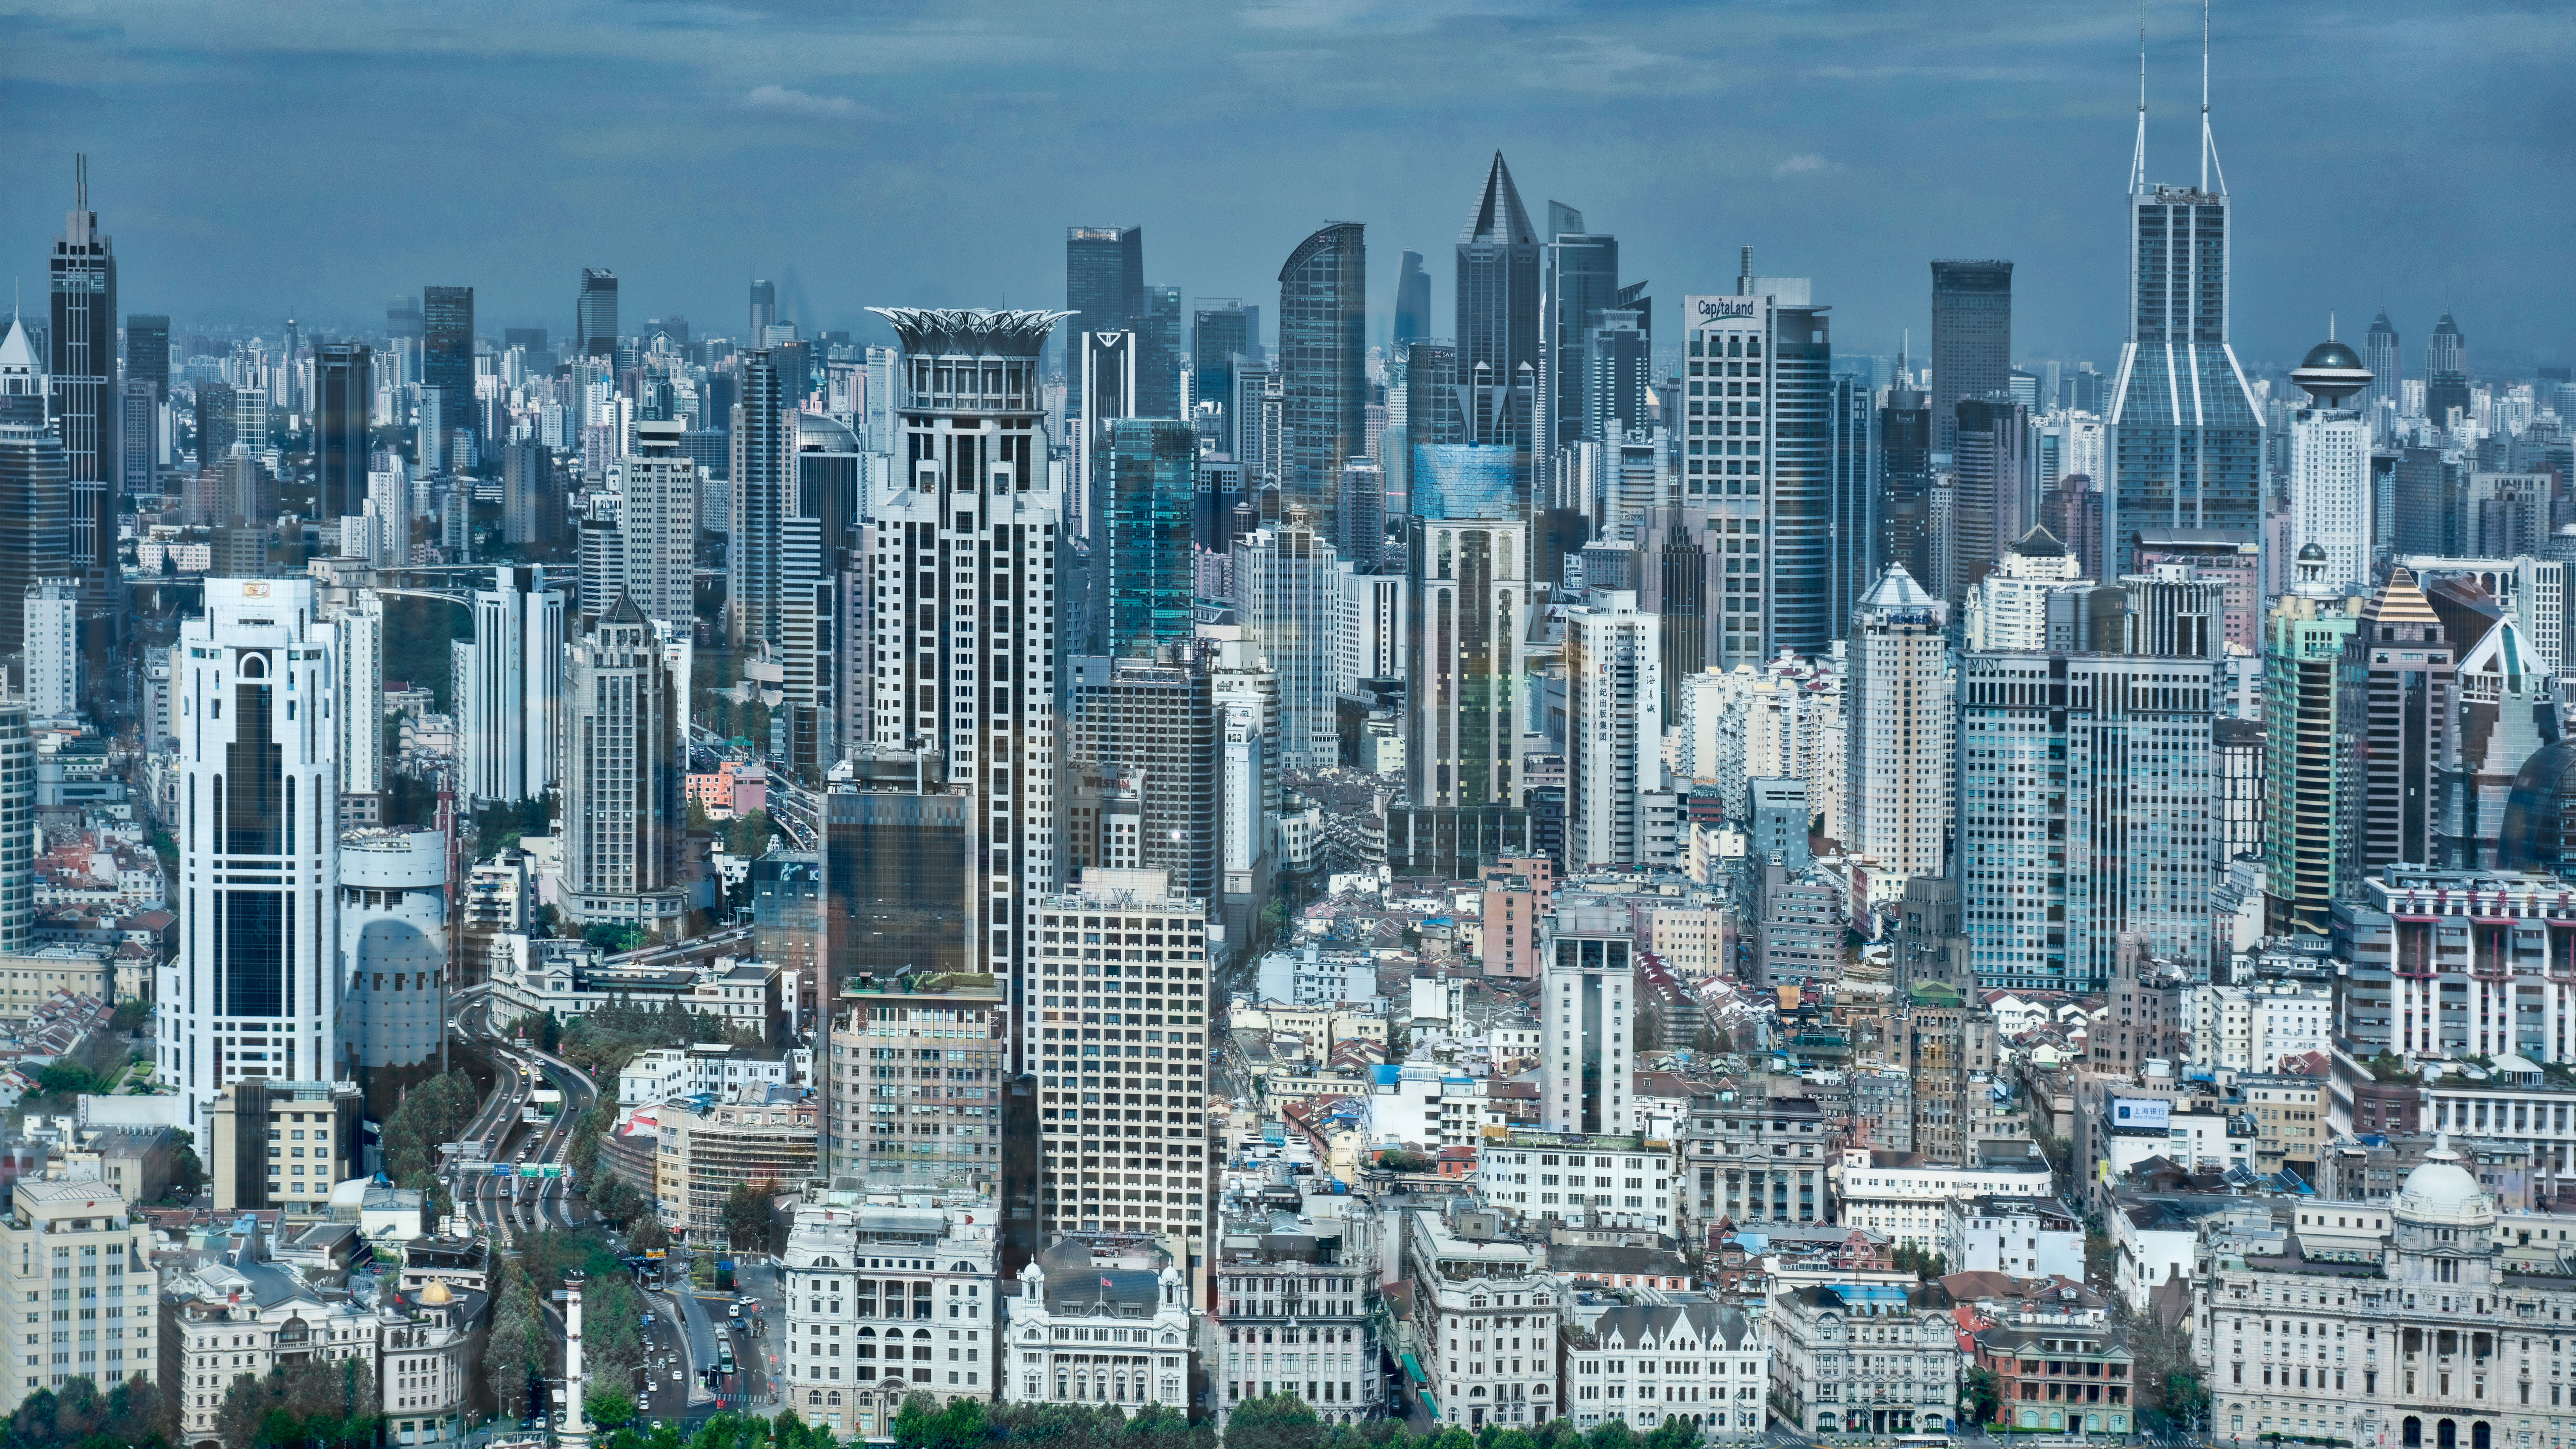 General 7680x4320 Trey Ratcliff photography China Shanghai building city